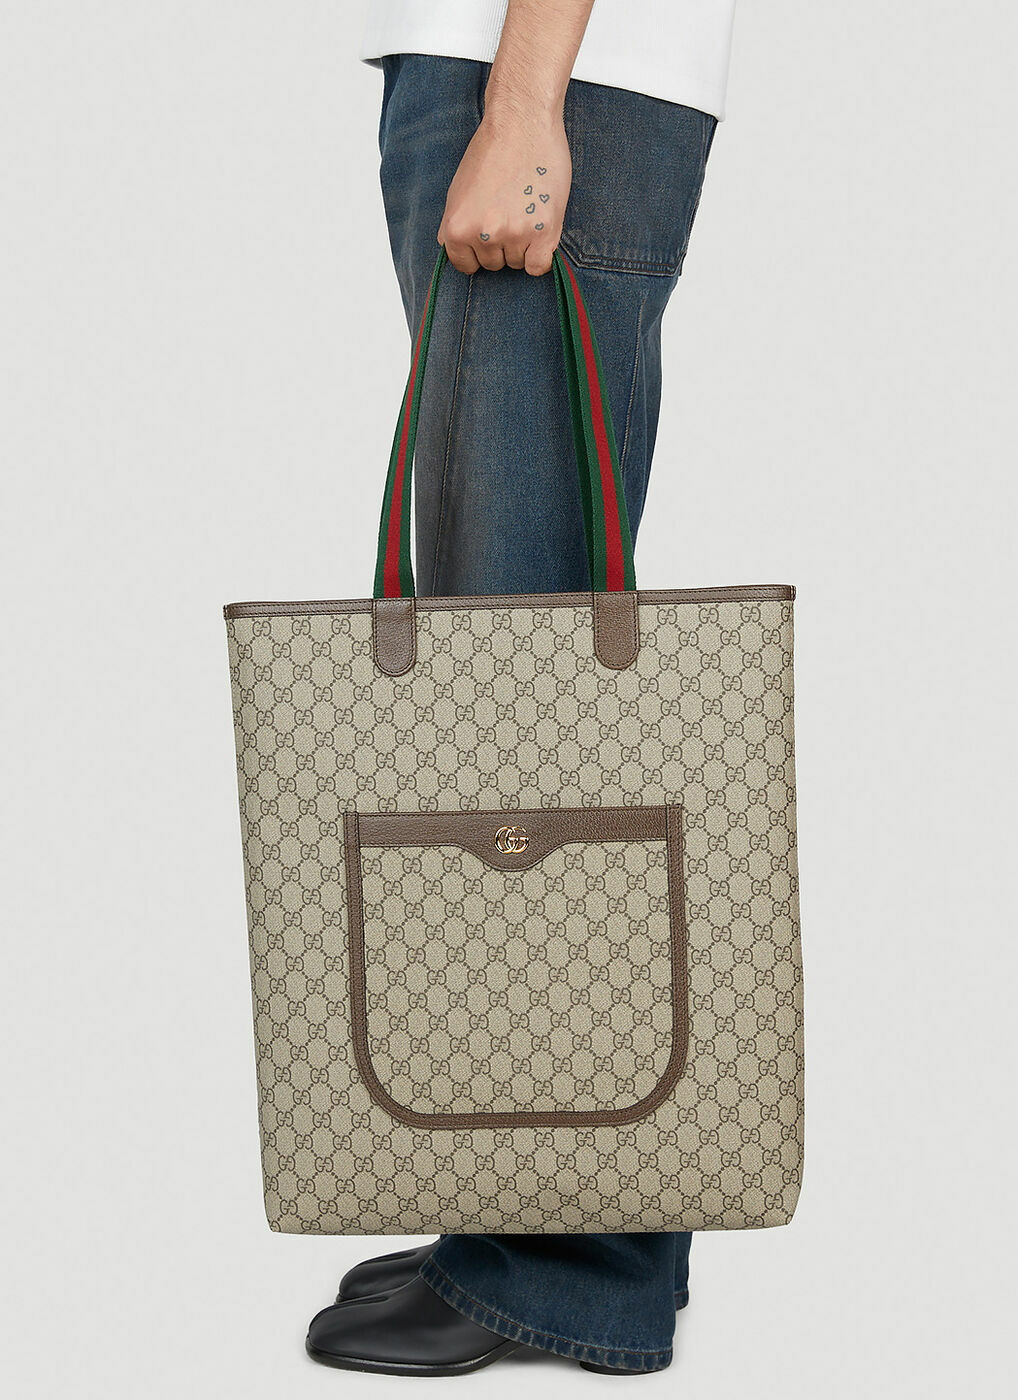 Gucci Men's Ophidia Small Tote Bag (Beige)